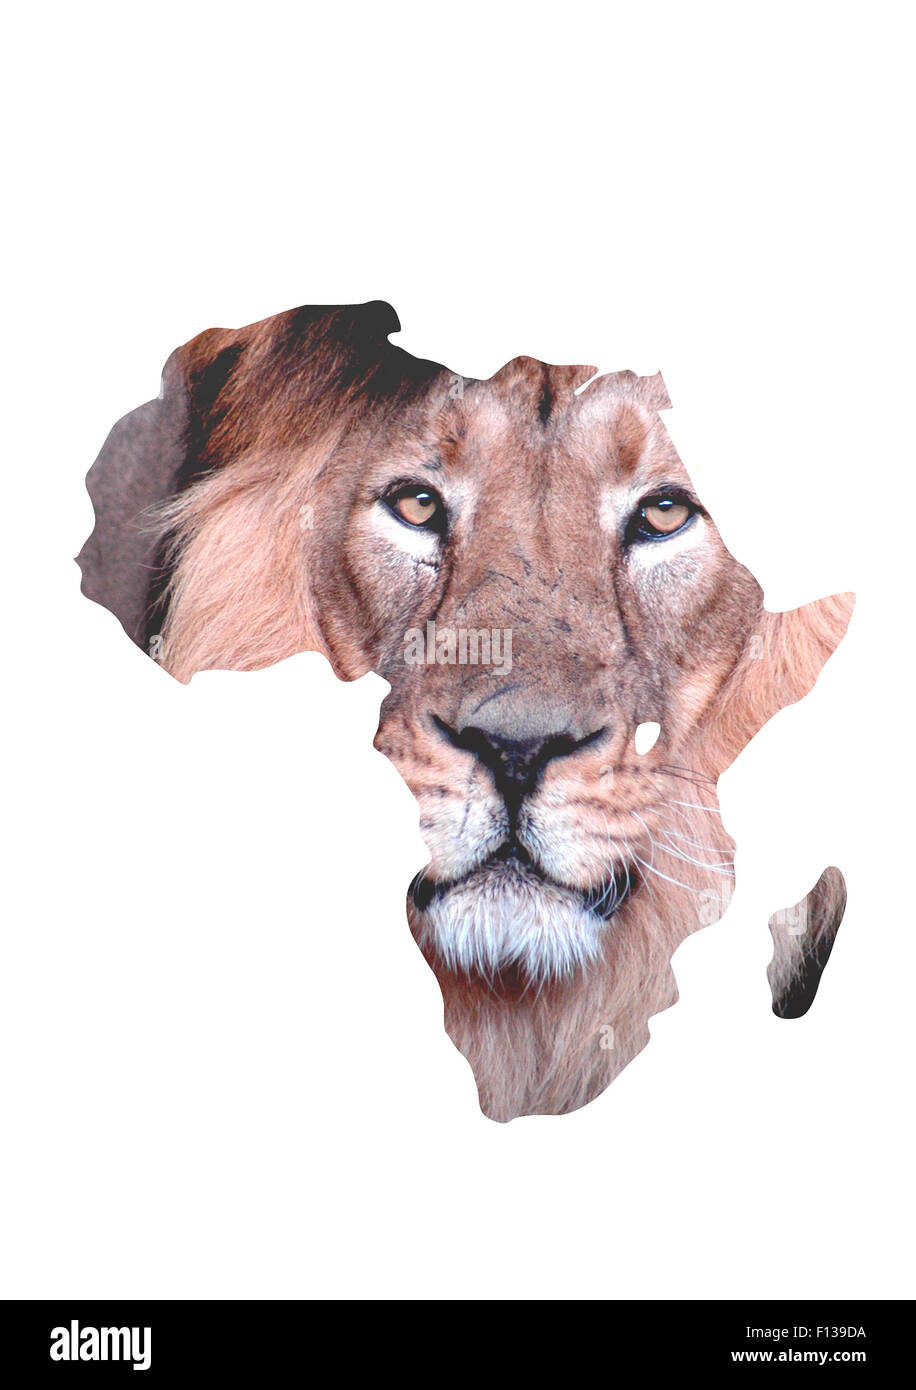 Loewe, Afrika, Symbolbild Stockfotografie - Alamy